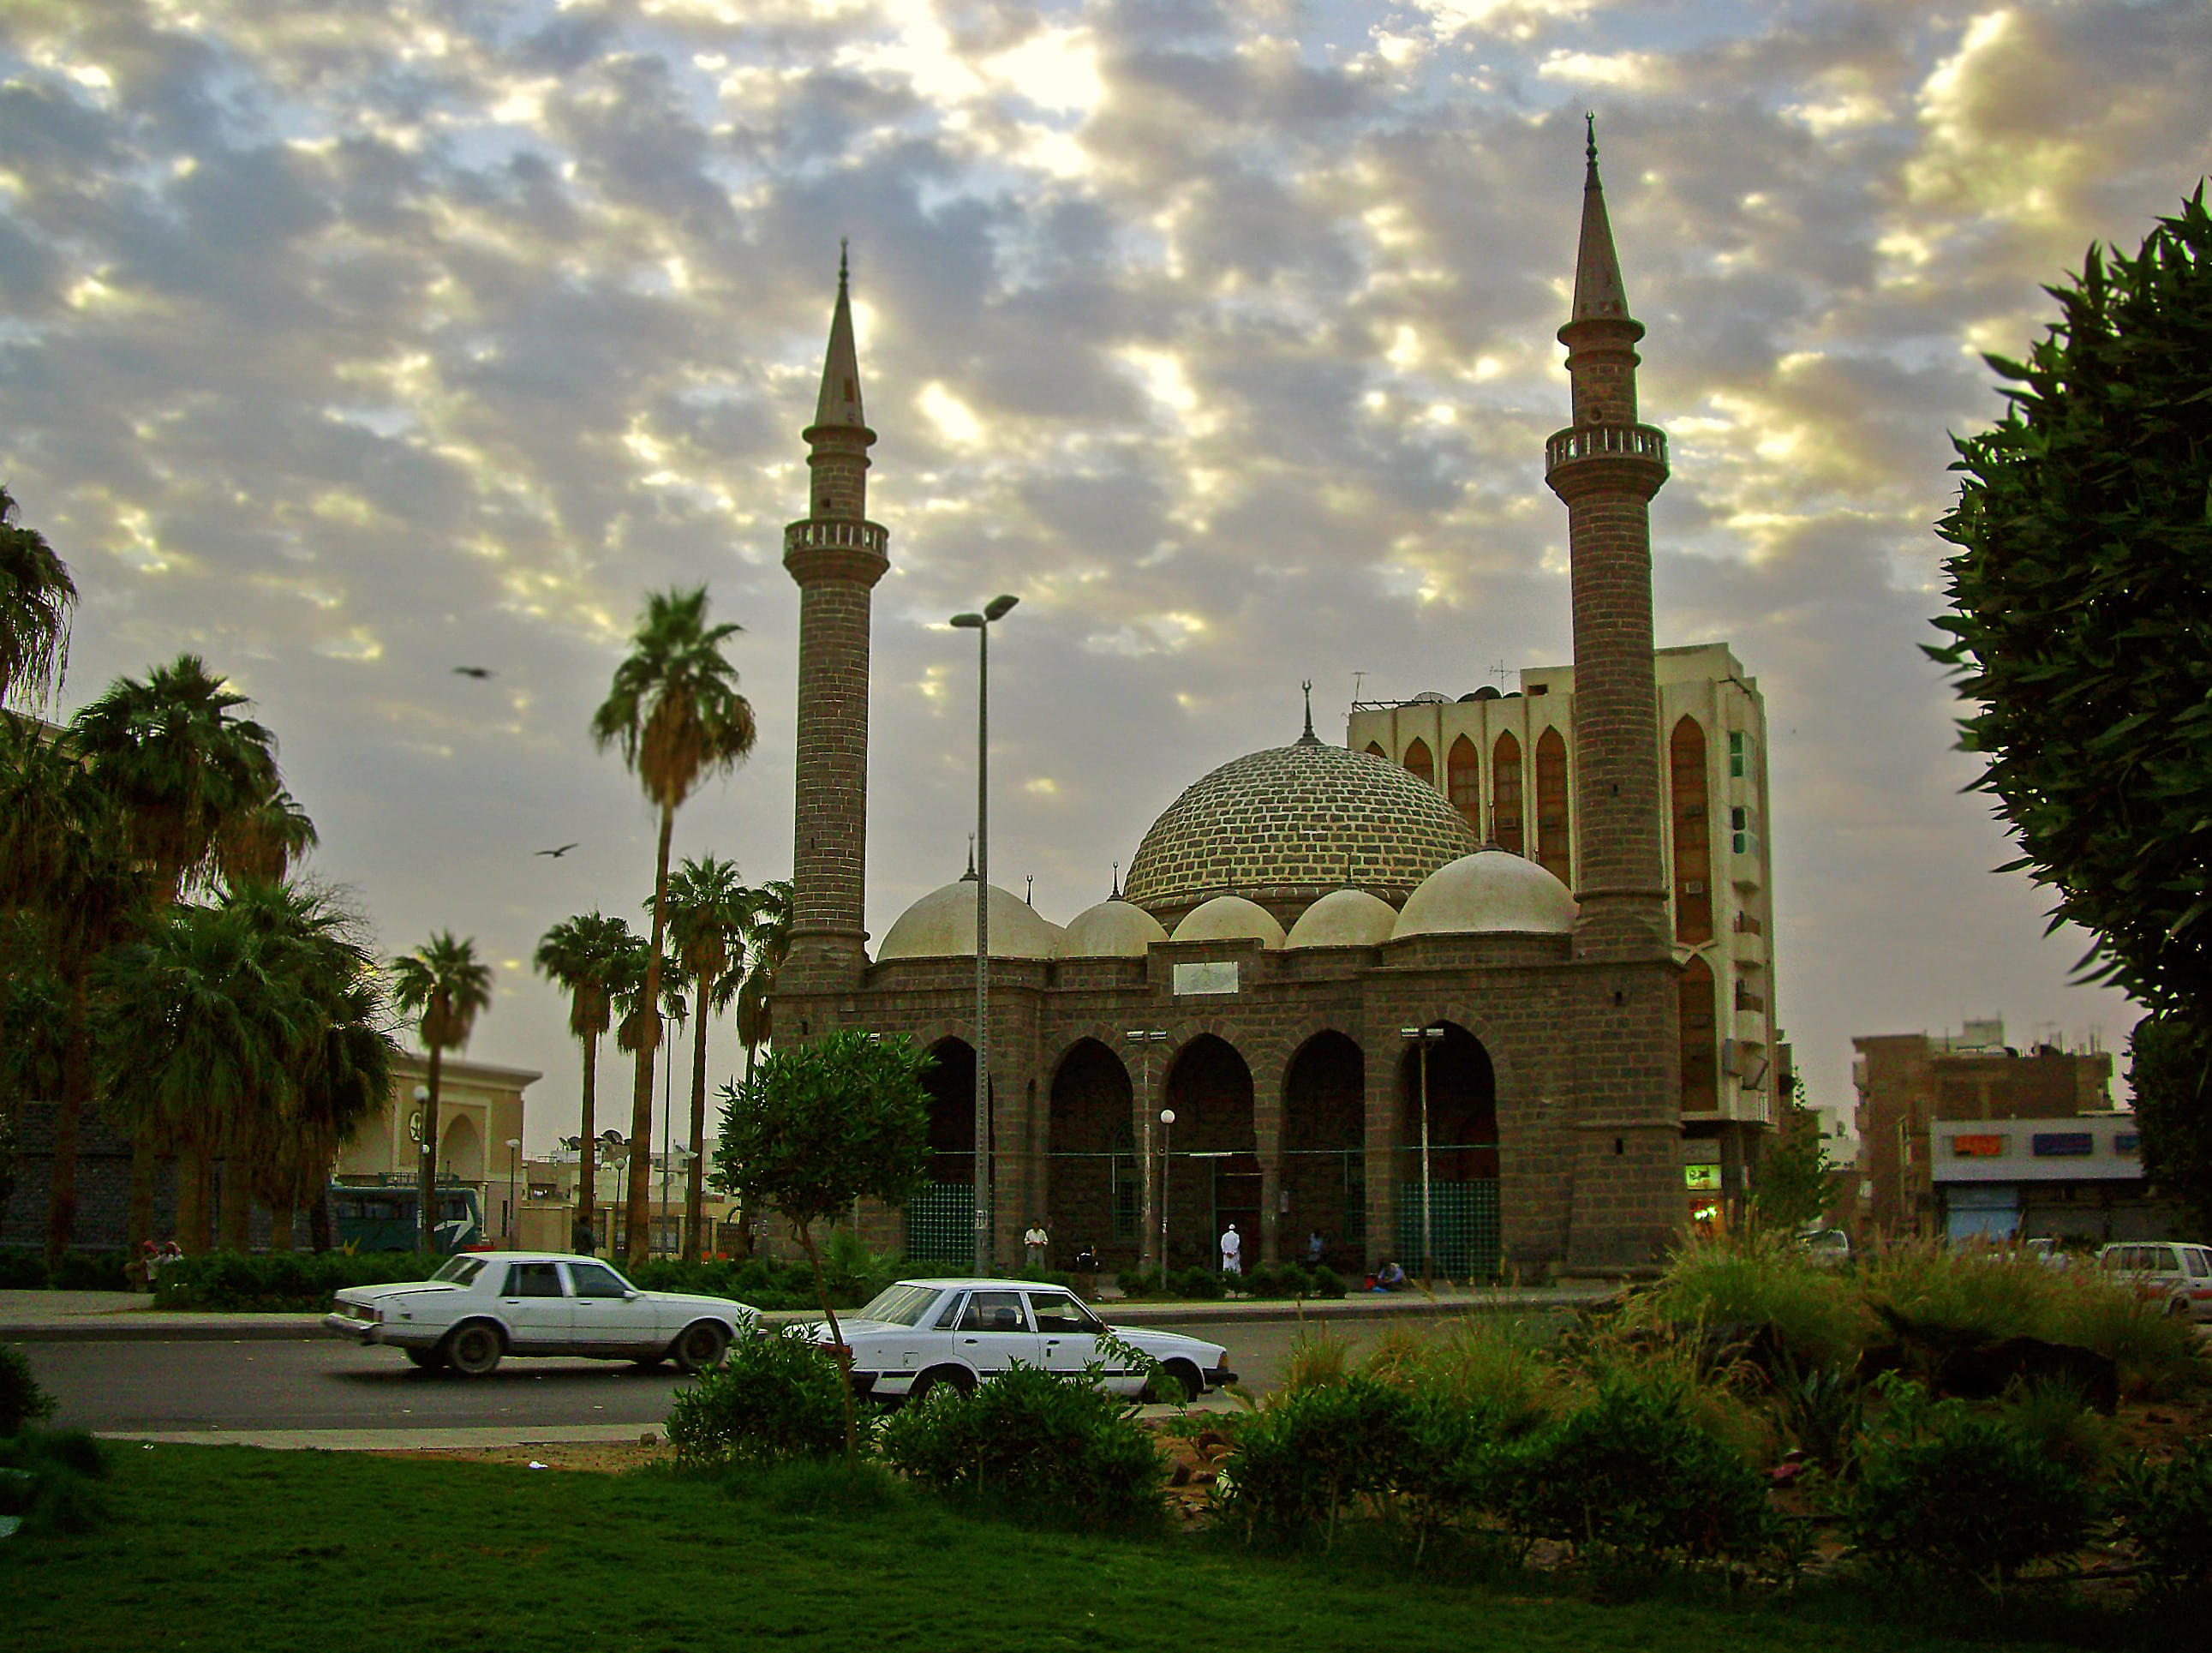 Anbariya Mosque Overview